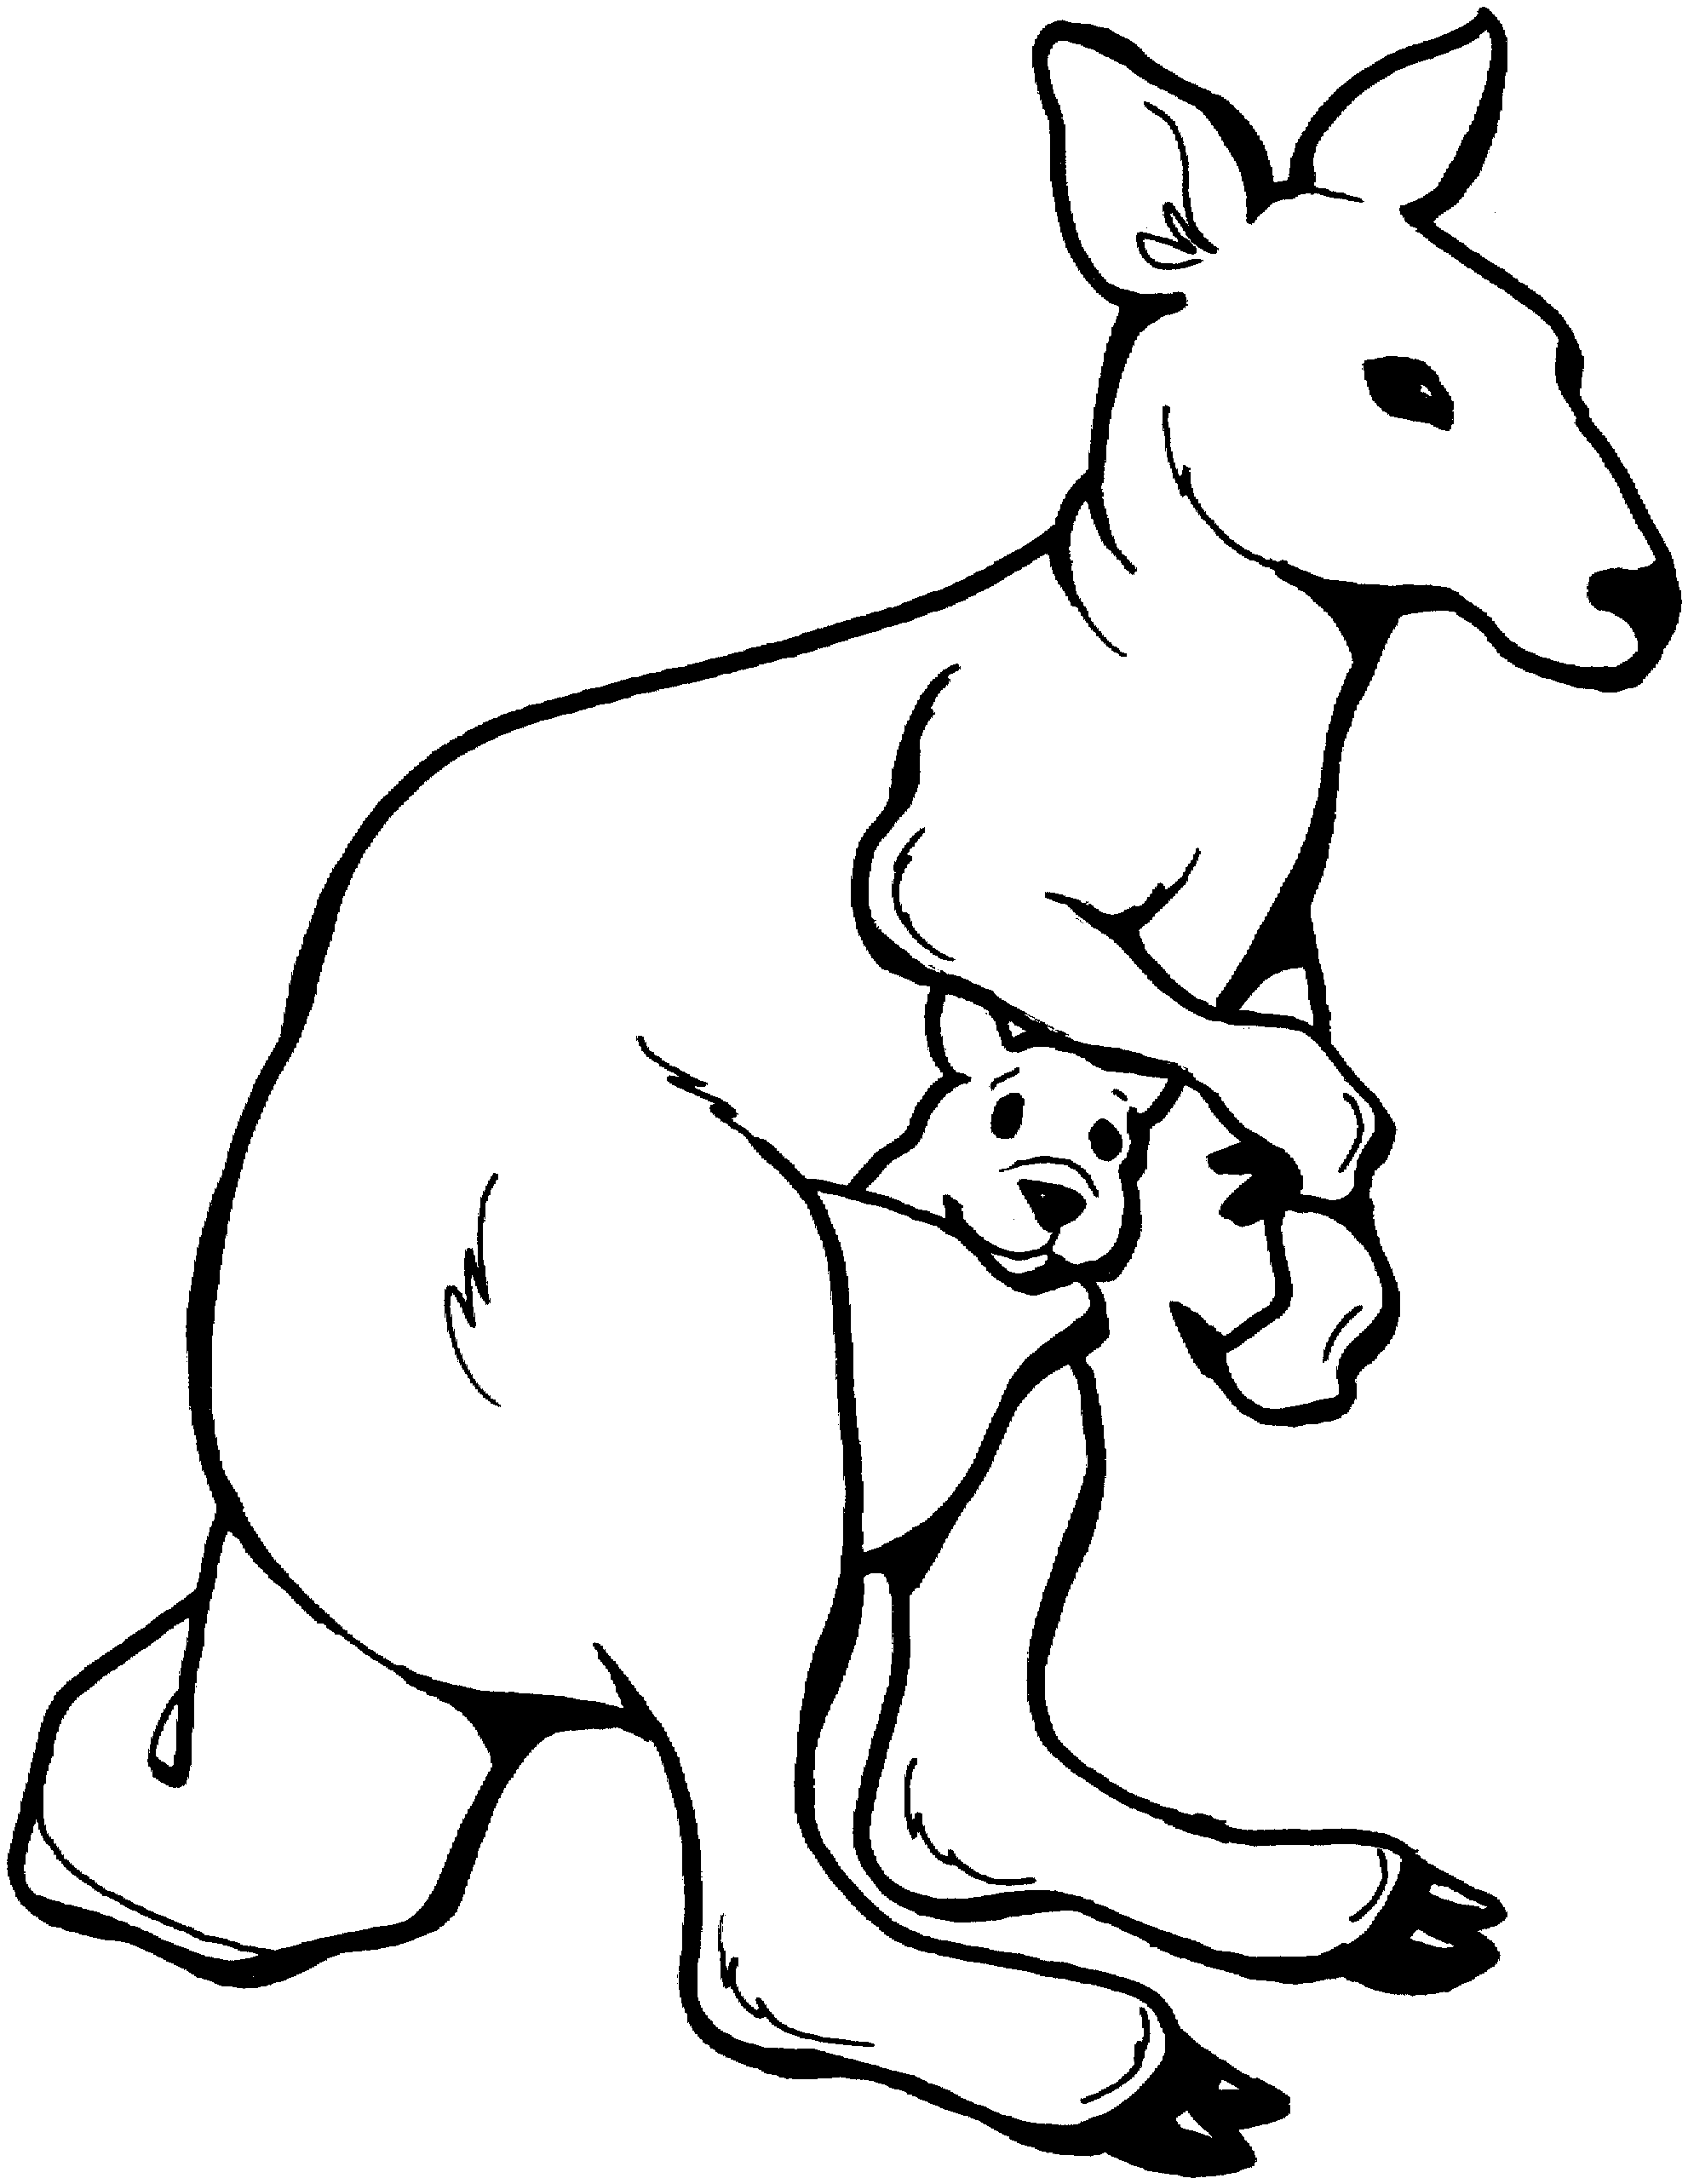 Coloring page: Kangaroo (Animals) #9195 - Free Printable Coloring Pages